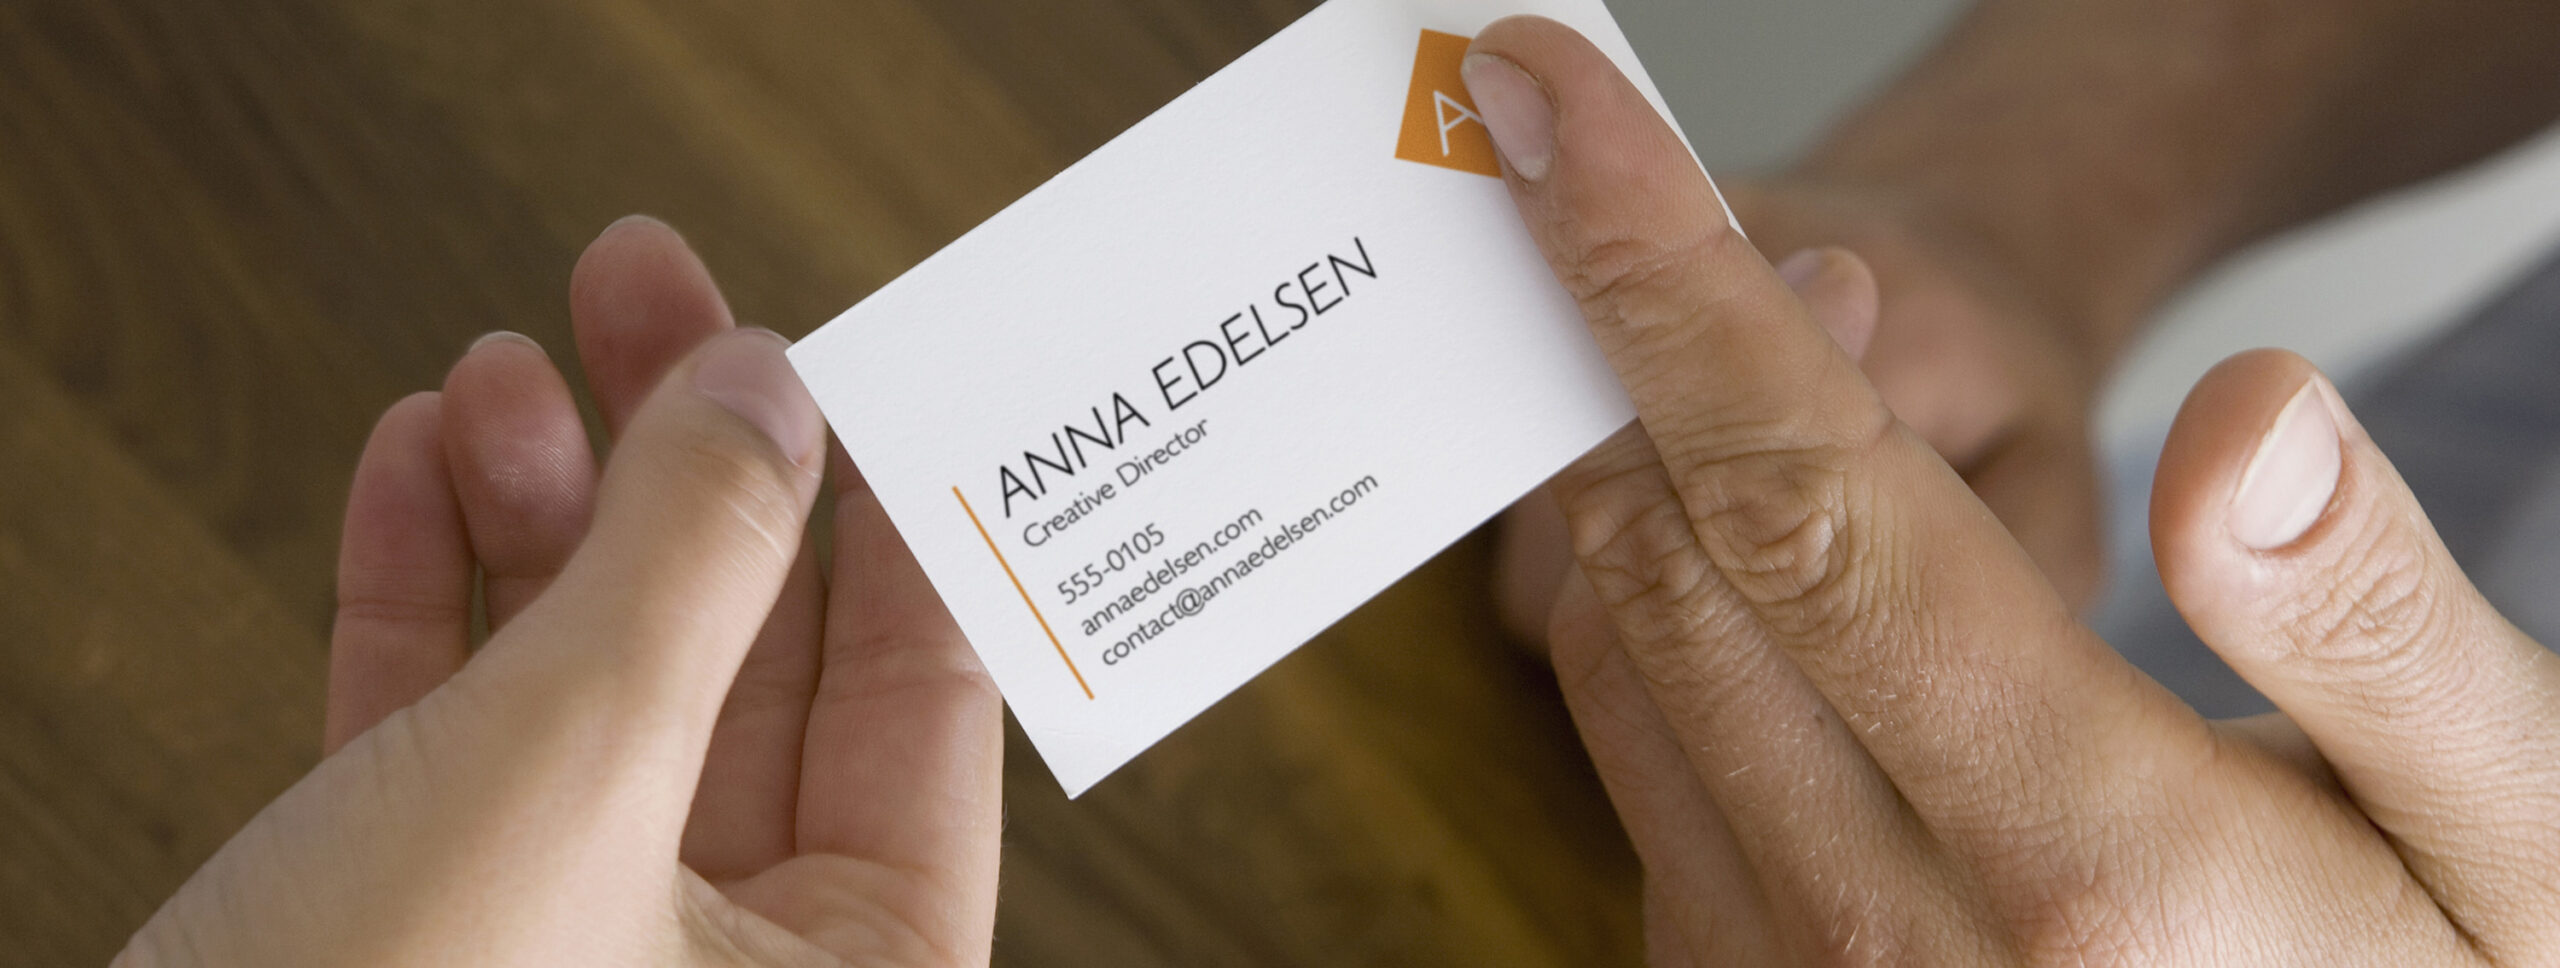 How to Use Printable Business Cards Like an Expert | Avery.com